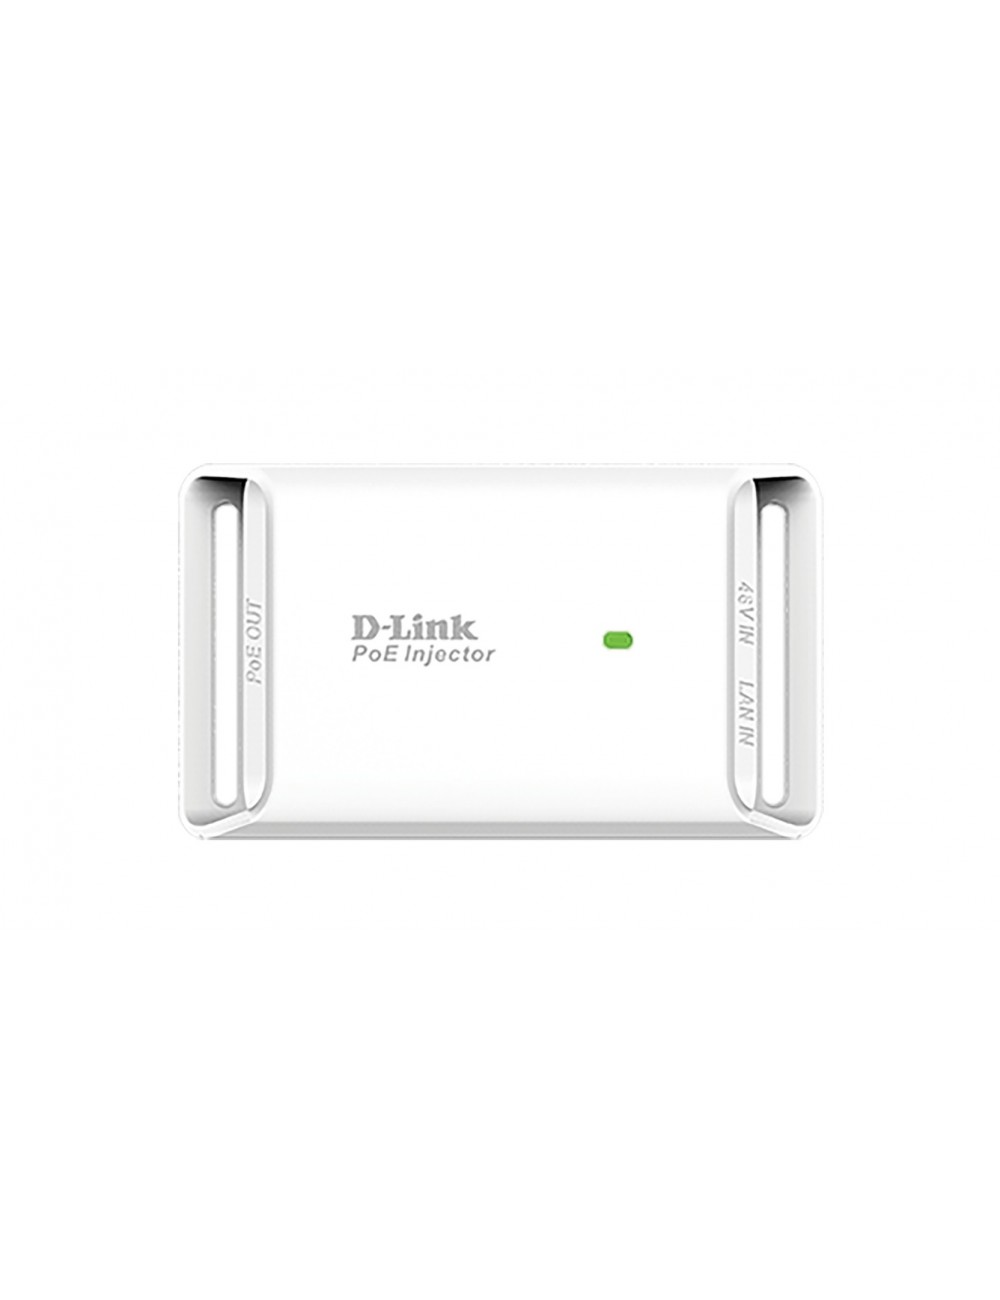 D-Link DPE-101GI adaptateur et injecteur PoE Gigabit Ethernet